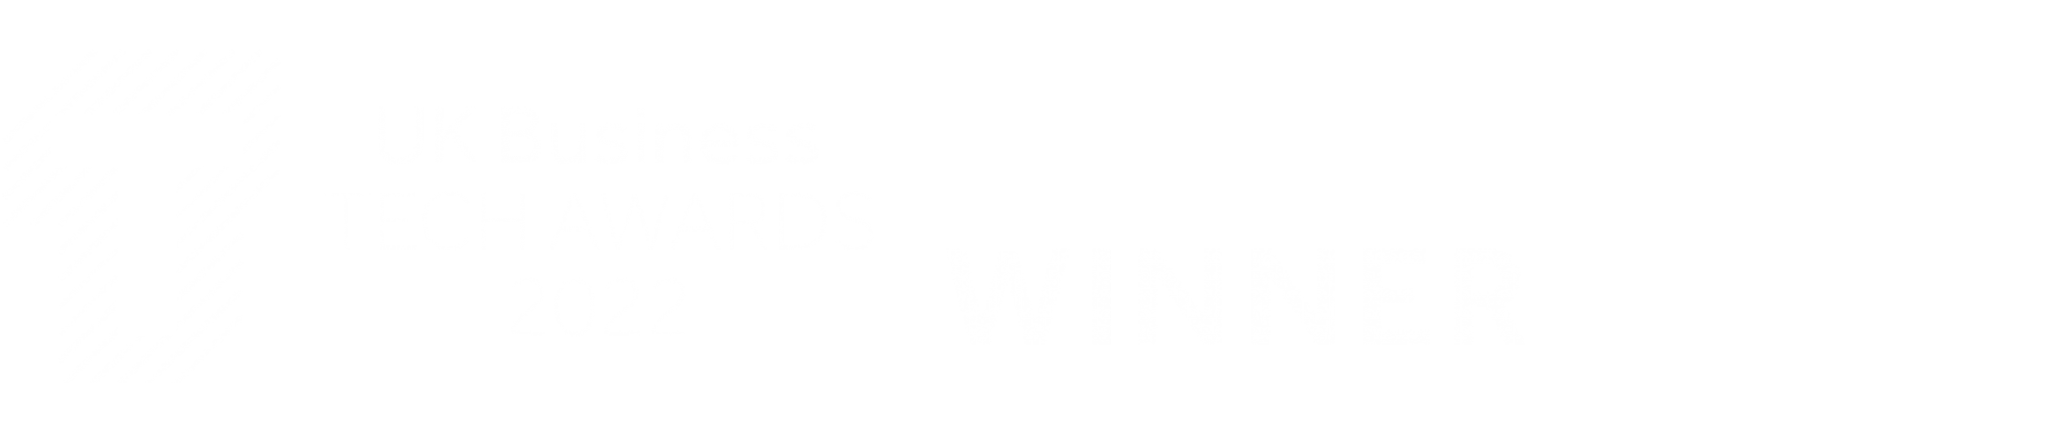 UK Business Tech Awards 2022 Winner Badge Best Technology Accelerator